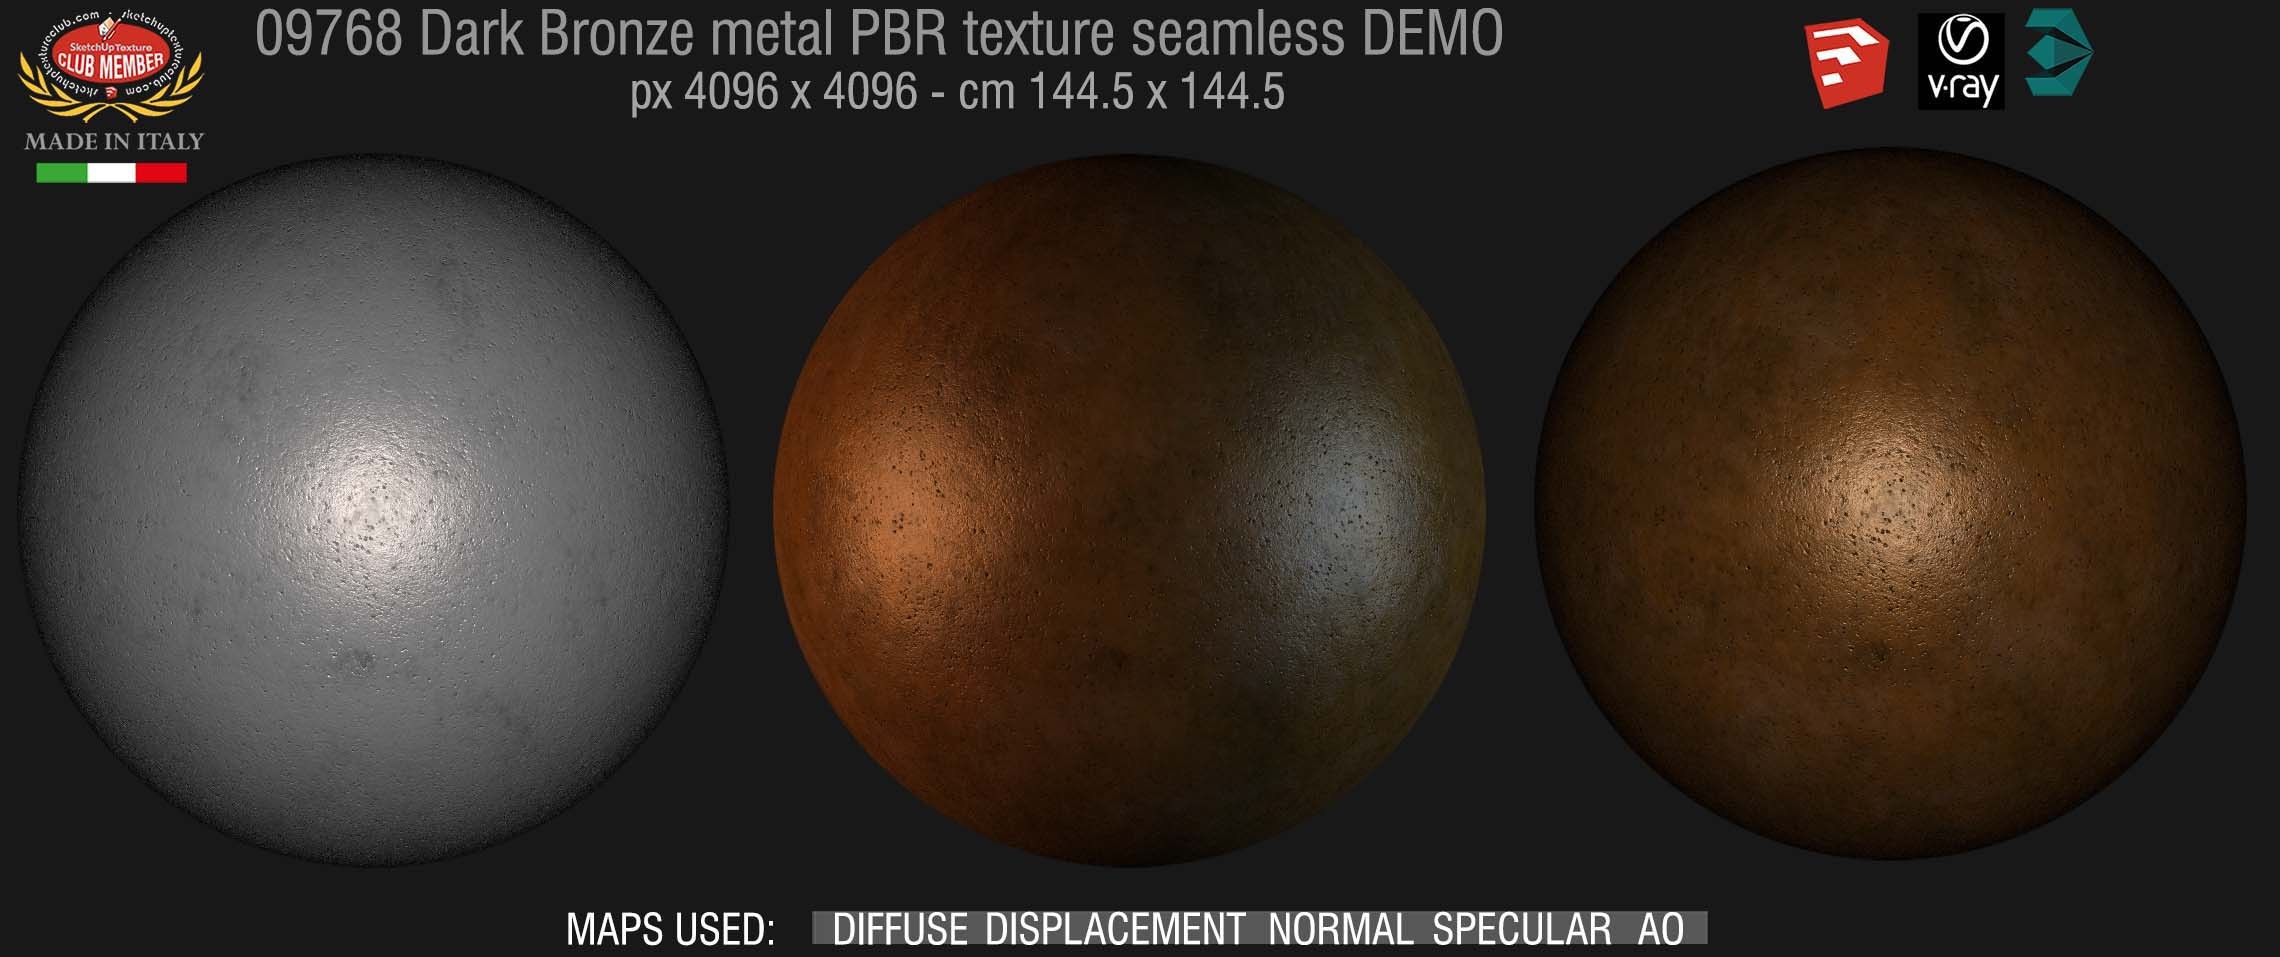 09768 Dark bronze metal PBR texture seamless DEMO